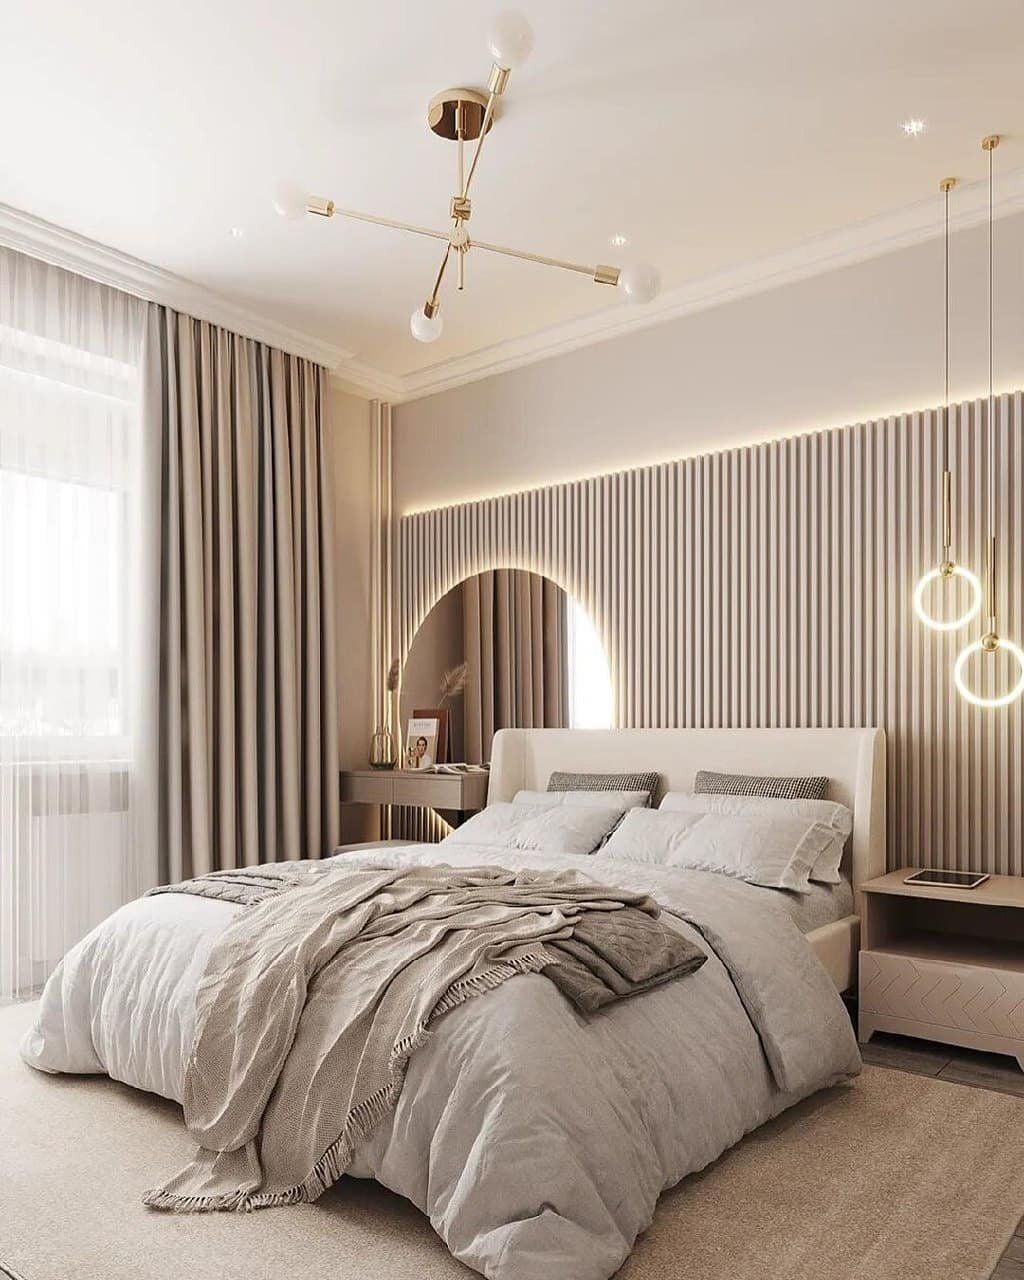 Dreamy Designs: Transform Your Bedroom with Bed Designs